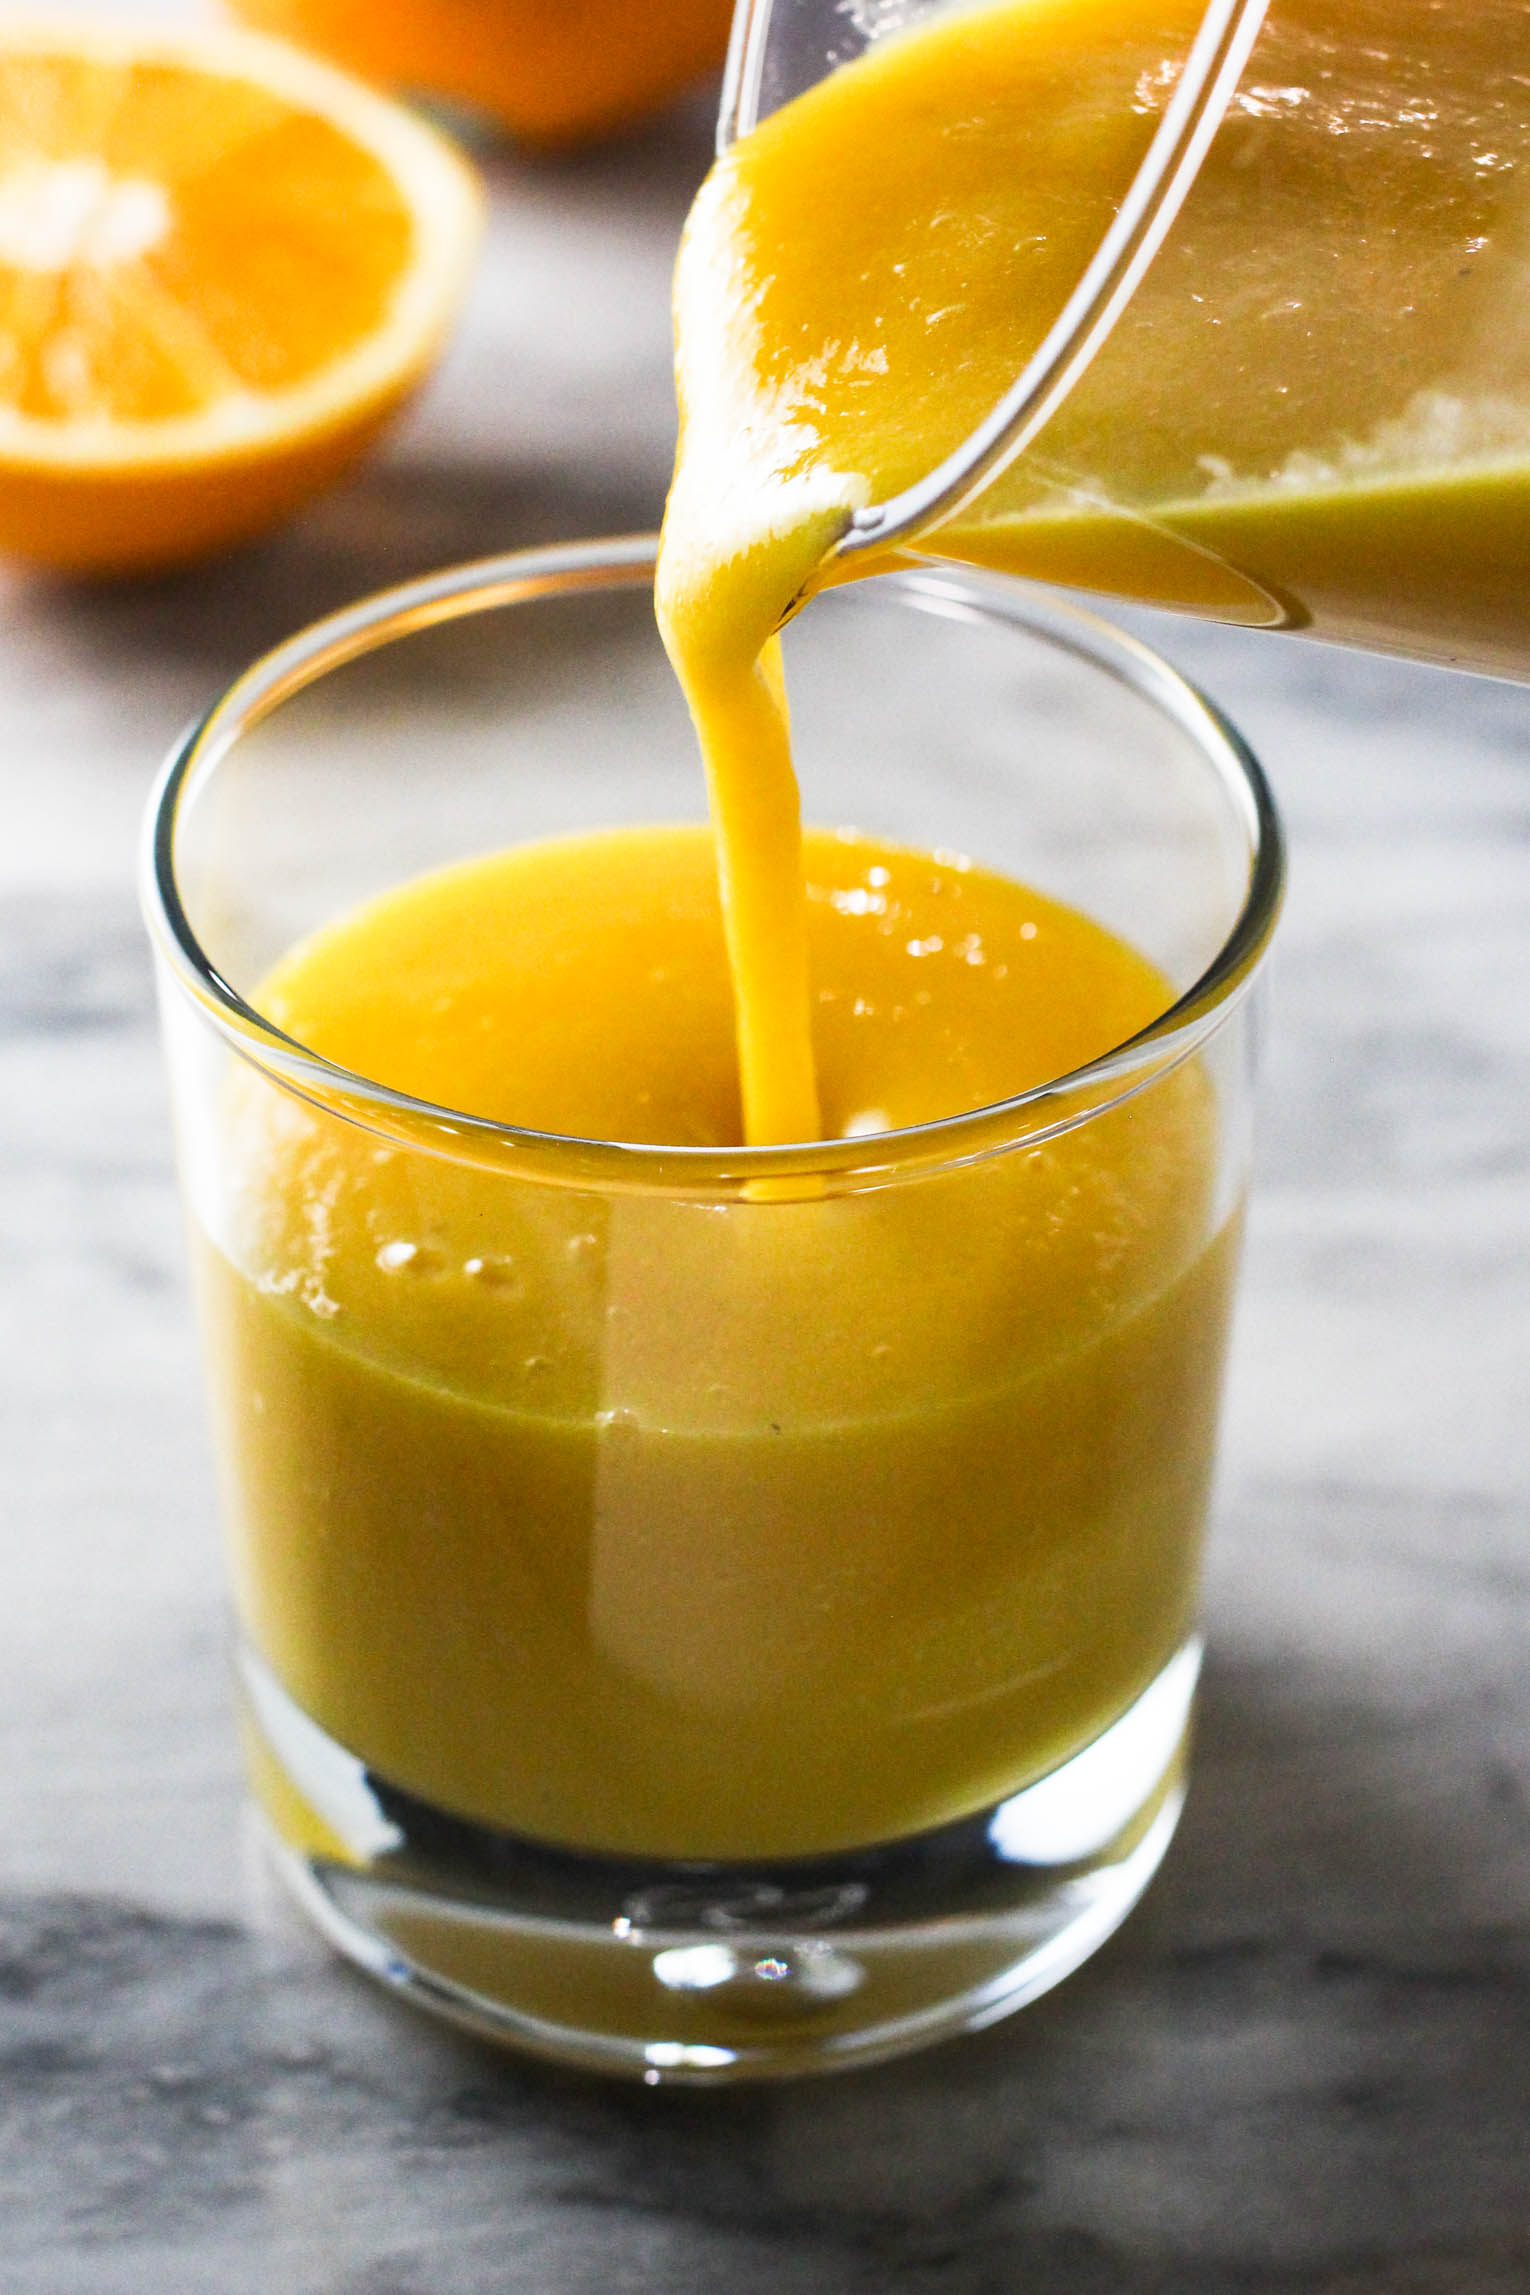 Orange mango smoothie being poured into a glass.